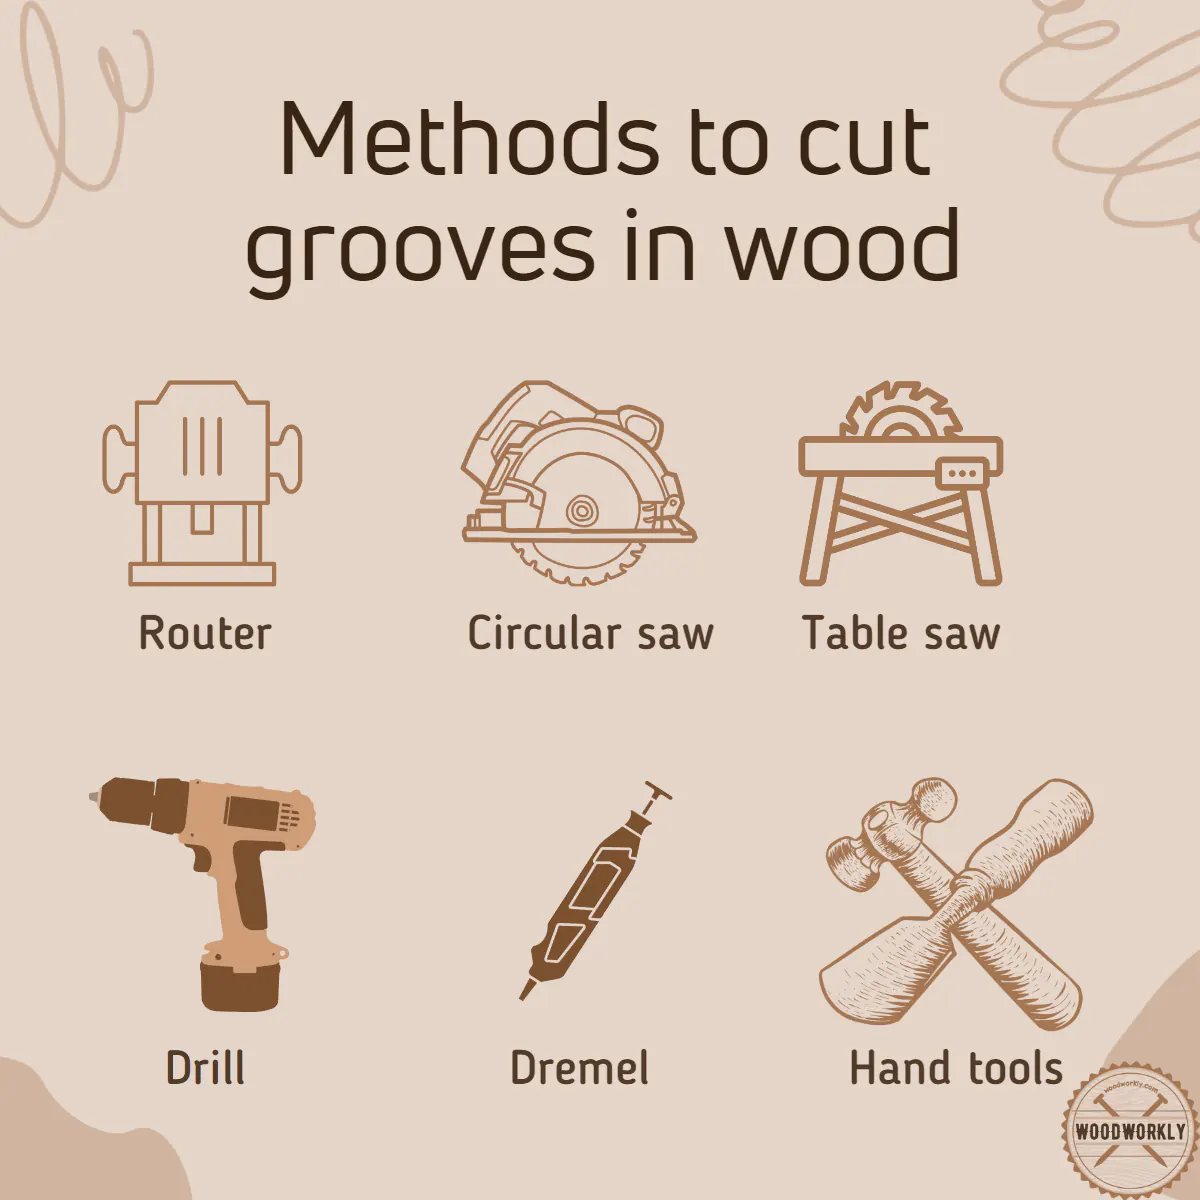 Methods to cut grooves in wood